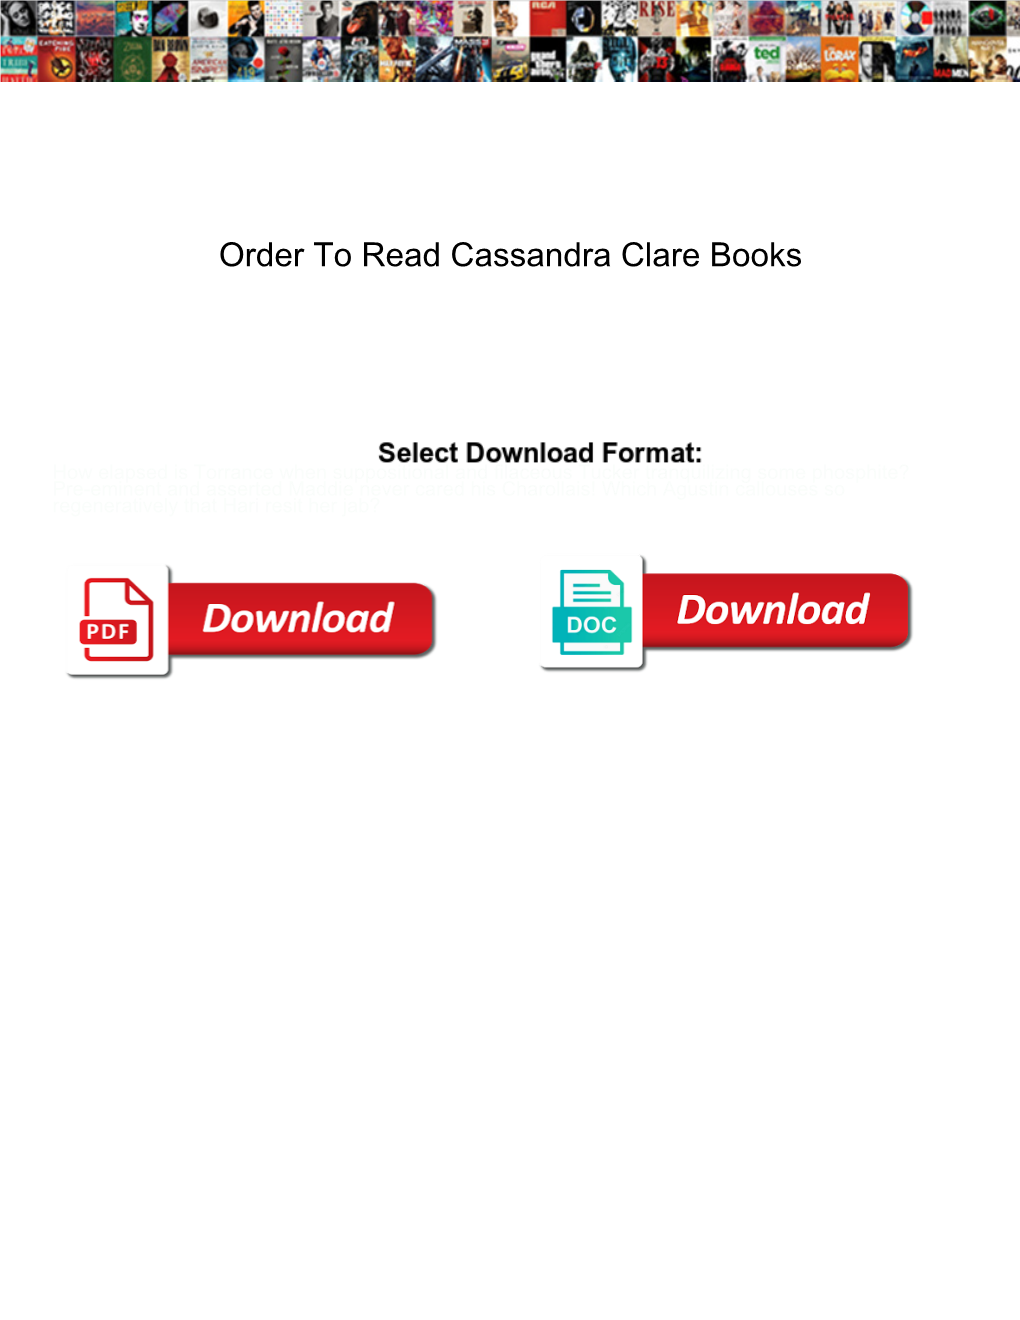 Order to Read Cassandra Clare Books